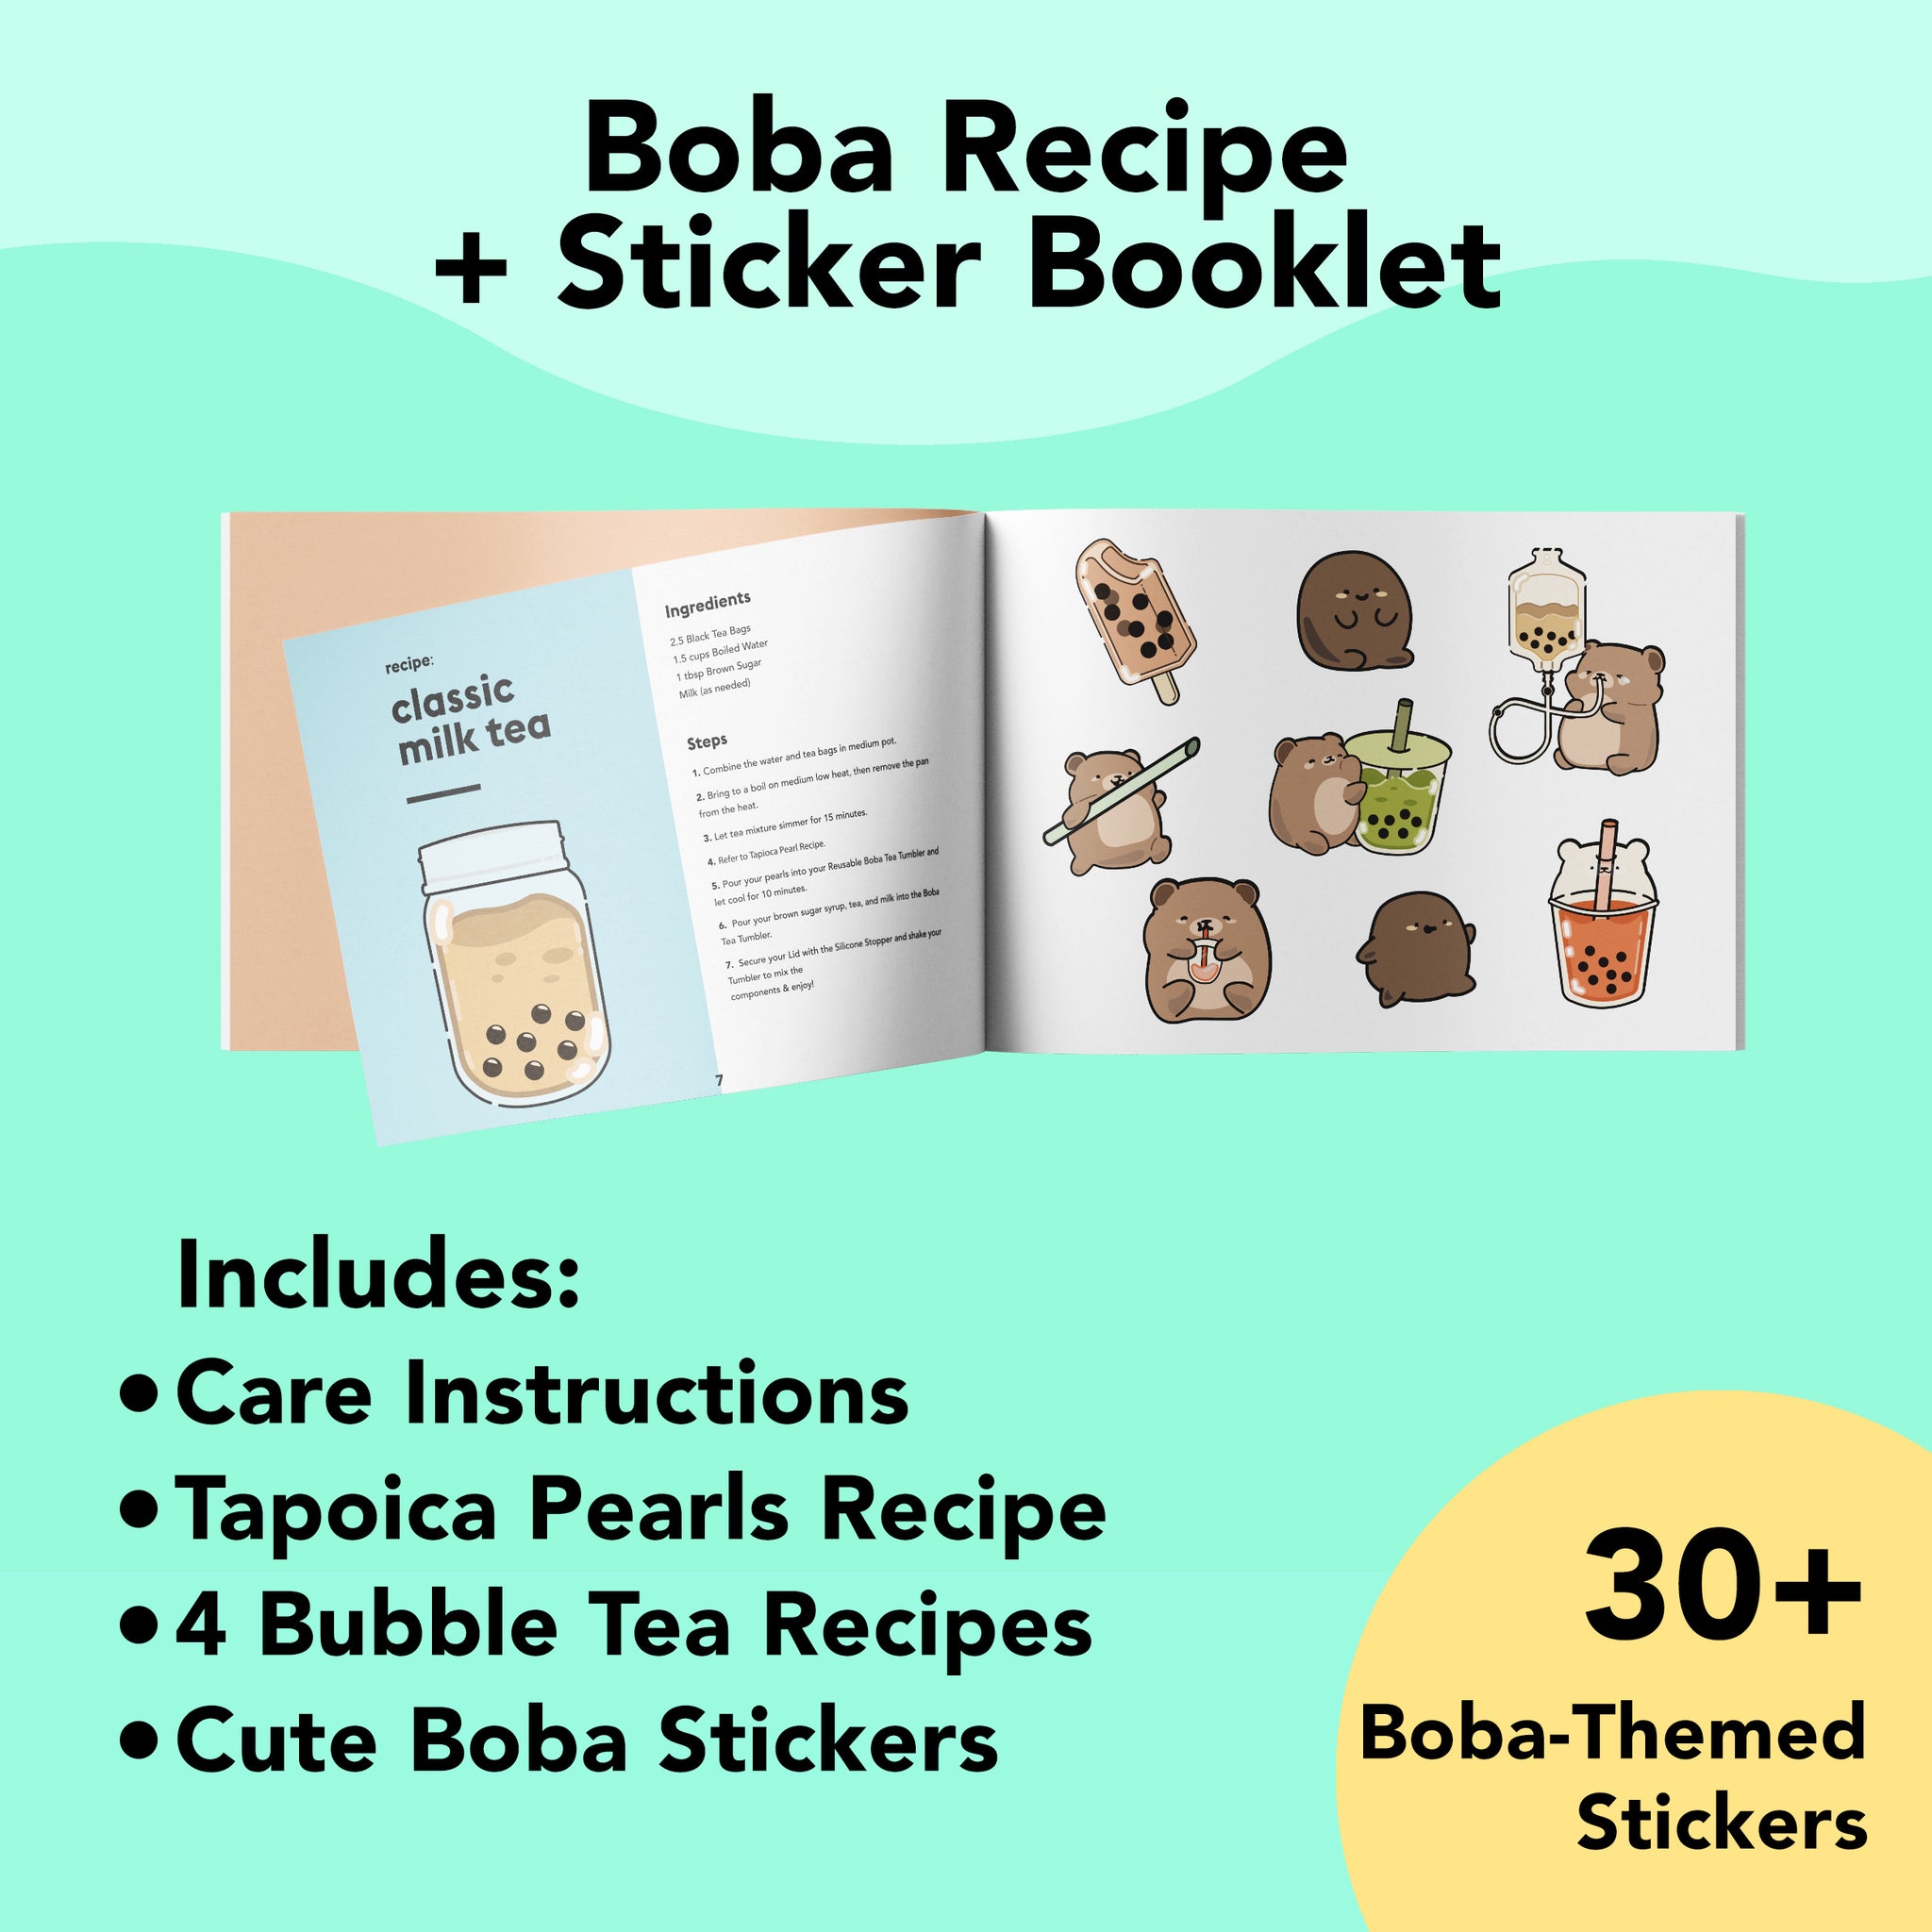 Reusable Boba Cup - The Complete Boba Tea Tumbler Kit – mybubbli